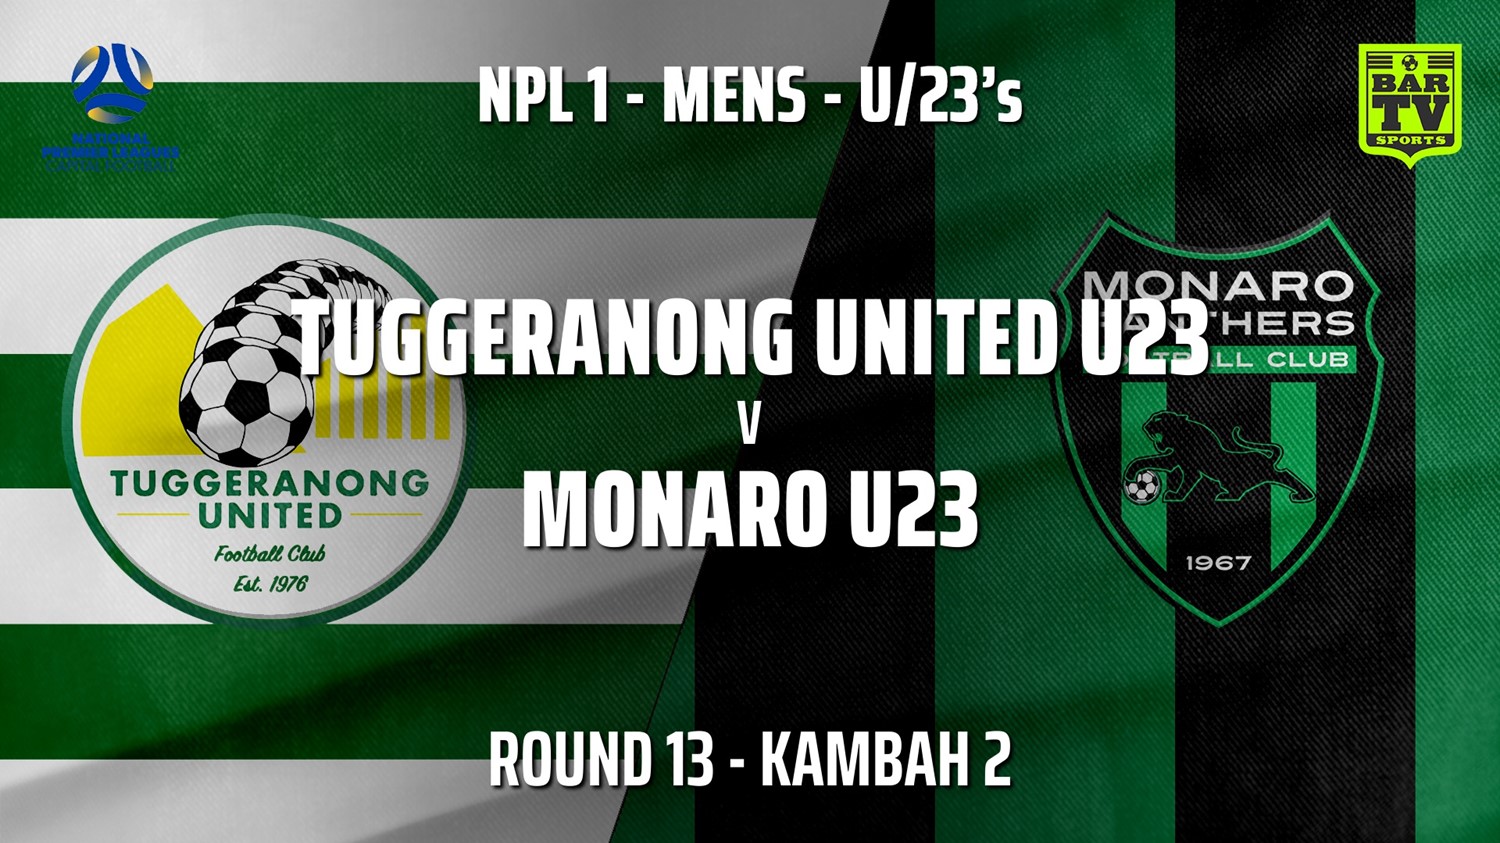 210711-Capital NPL U23 Round 13 - Tuggeranong United U23 v Monaro Panthers U23 Minigame Slate Image